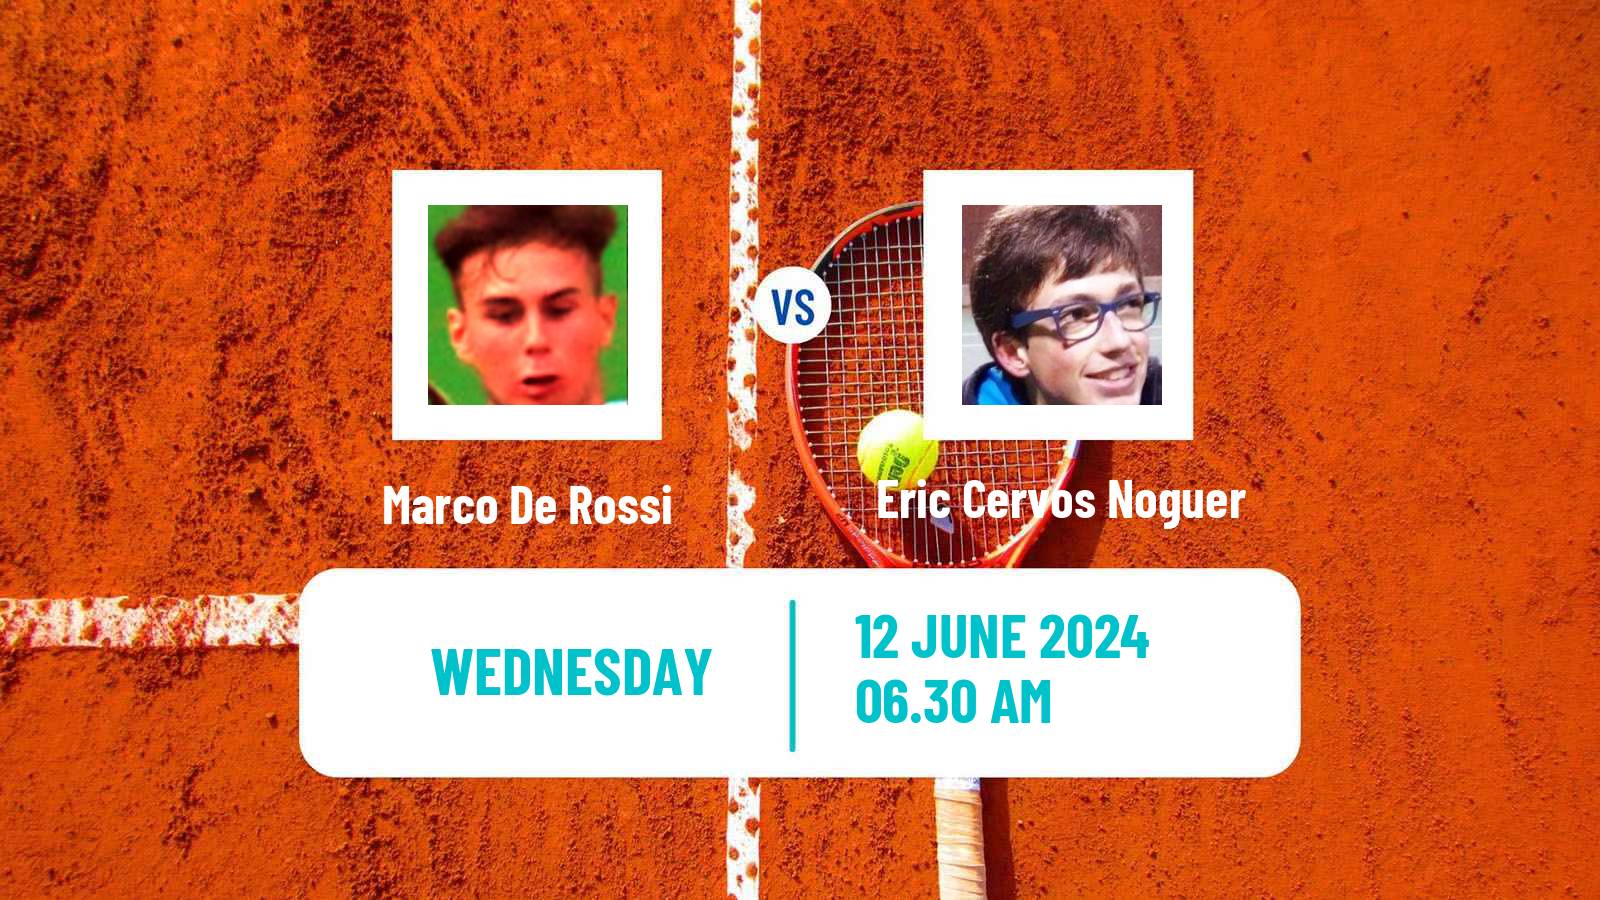 Tennis Davis Cup Group IV Marco De Rossi - Eric Cervos Noguer